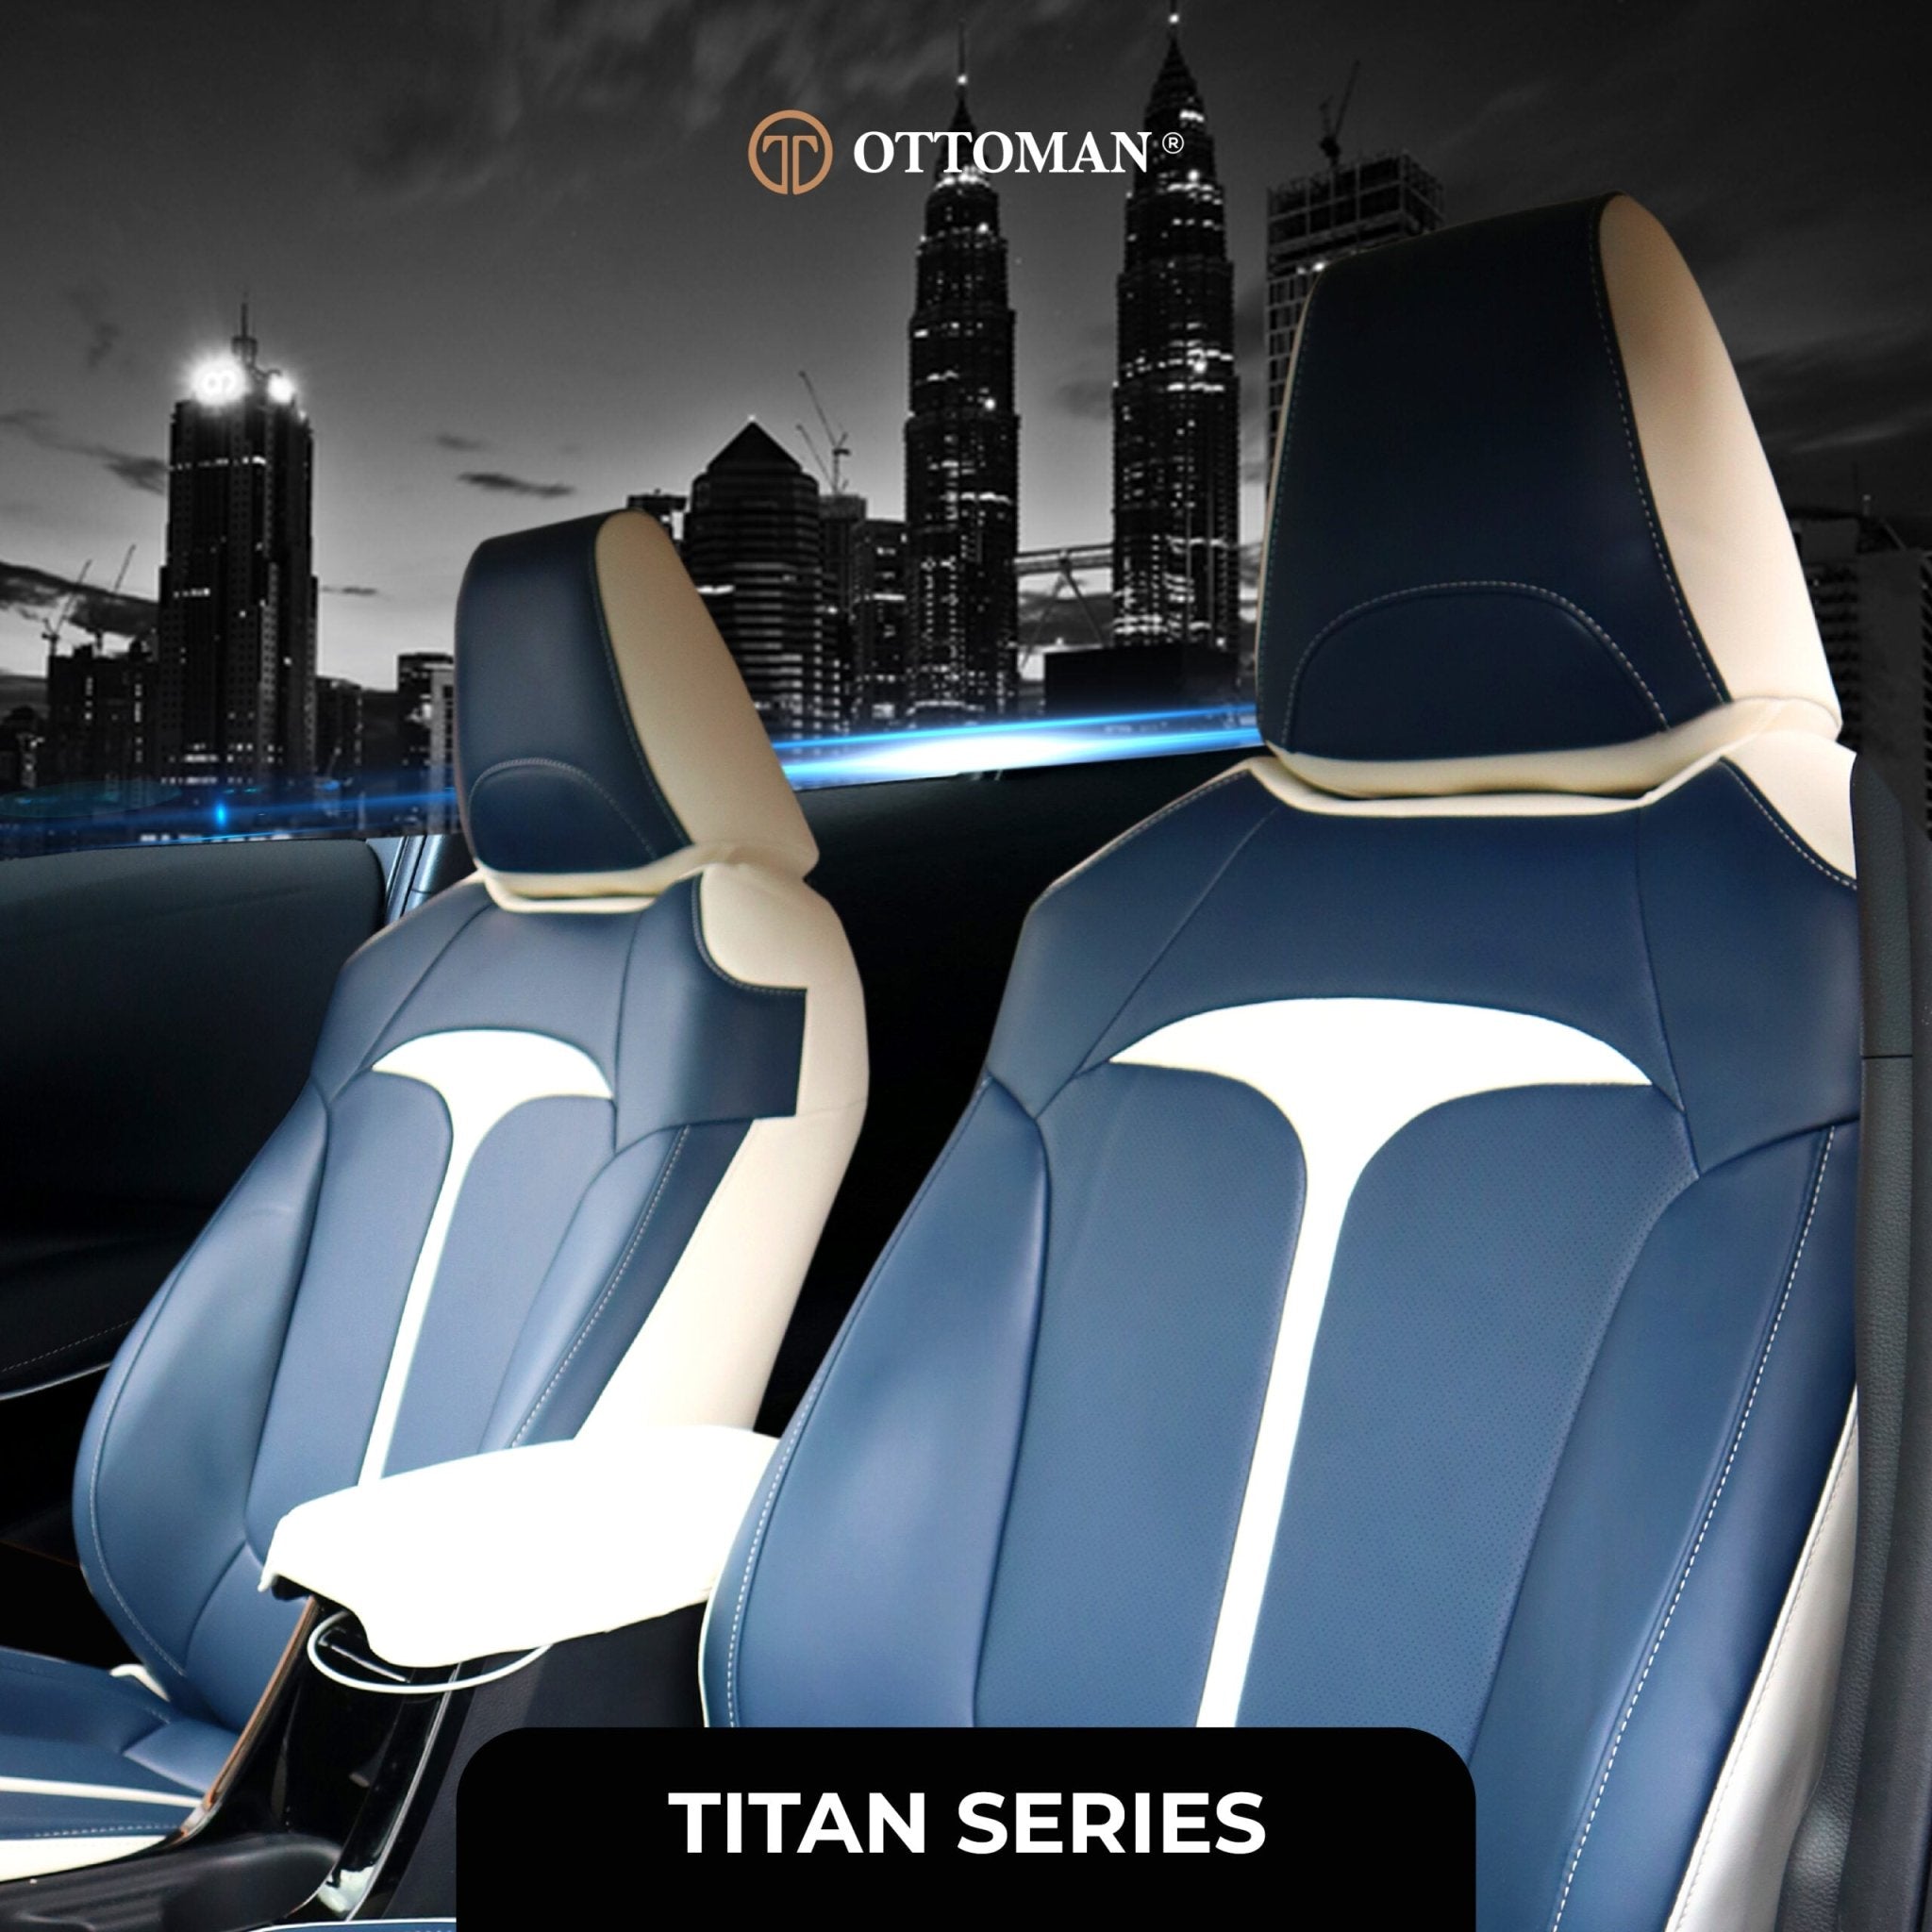 Nissan Teana L33 (2014-Present) Ottoman Seat Cover Seat Cover in Klang Selangor, Penang, Johor Bahru - Ottoman Car Mats